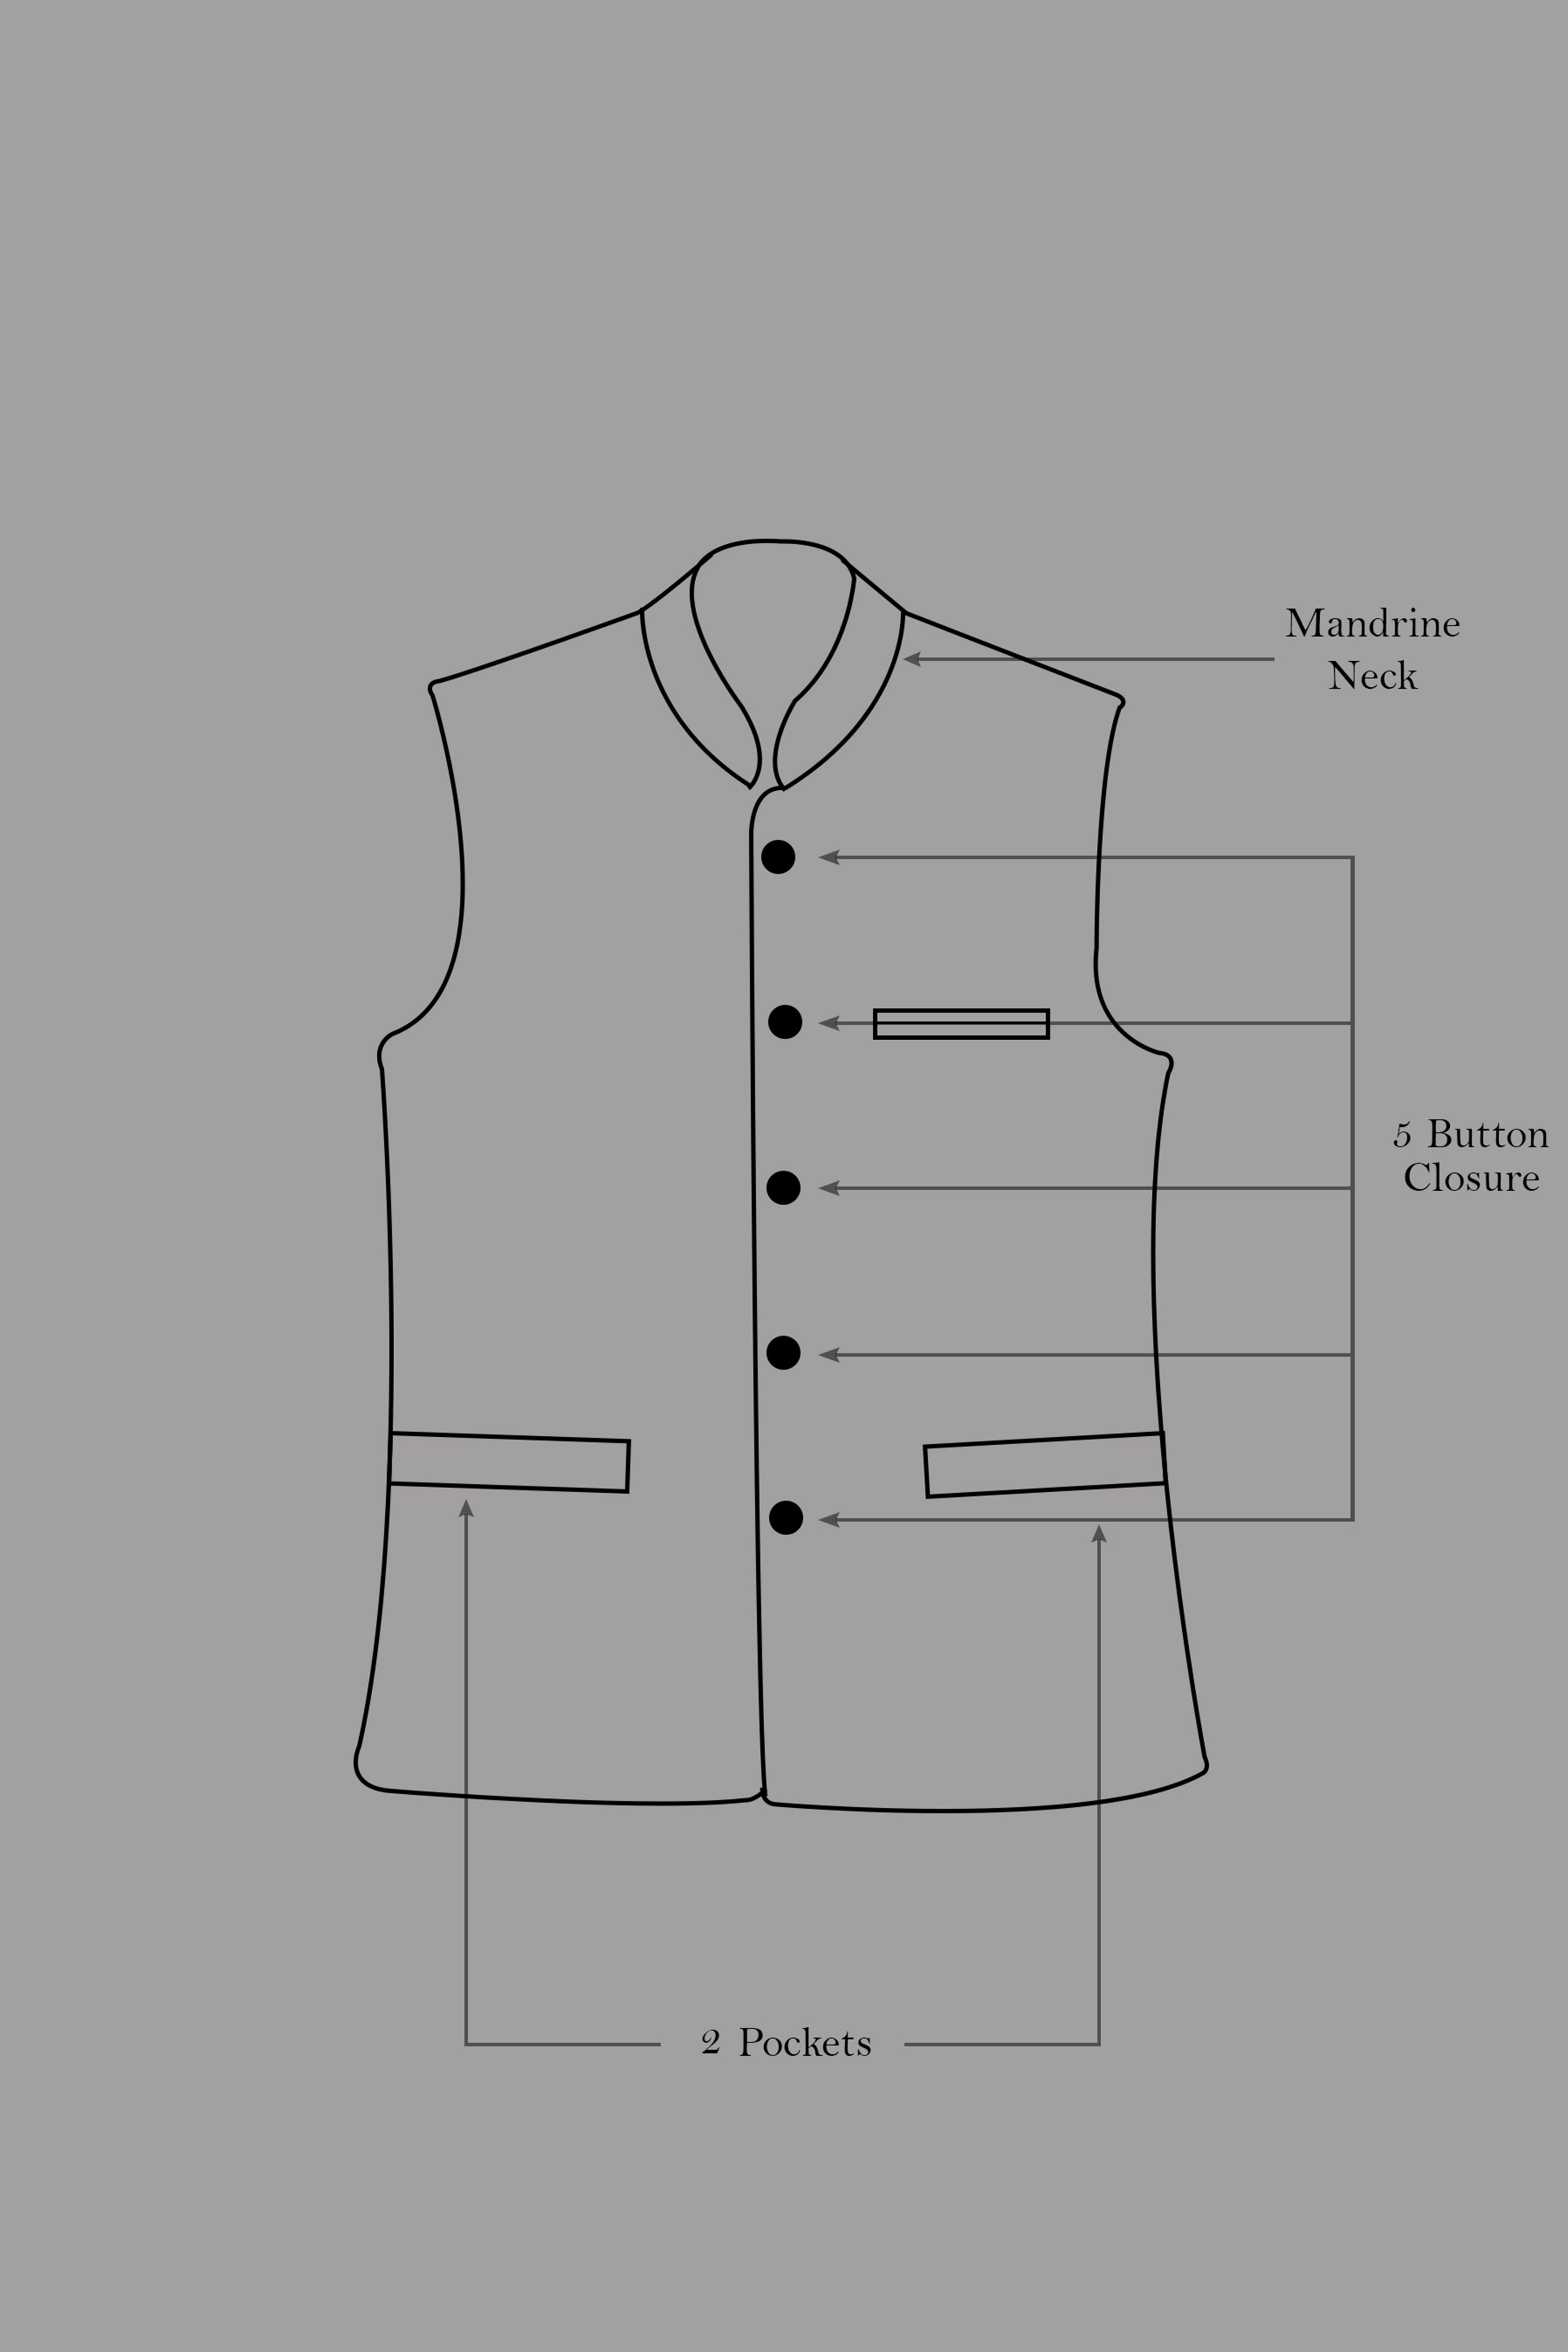 Foggy Brown Paisley Pattern Thread and Sequin Embroidered Designer Viscose Nehru Jacket